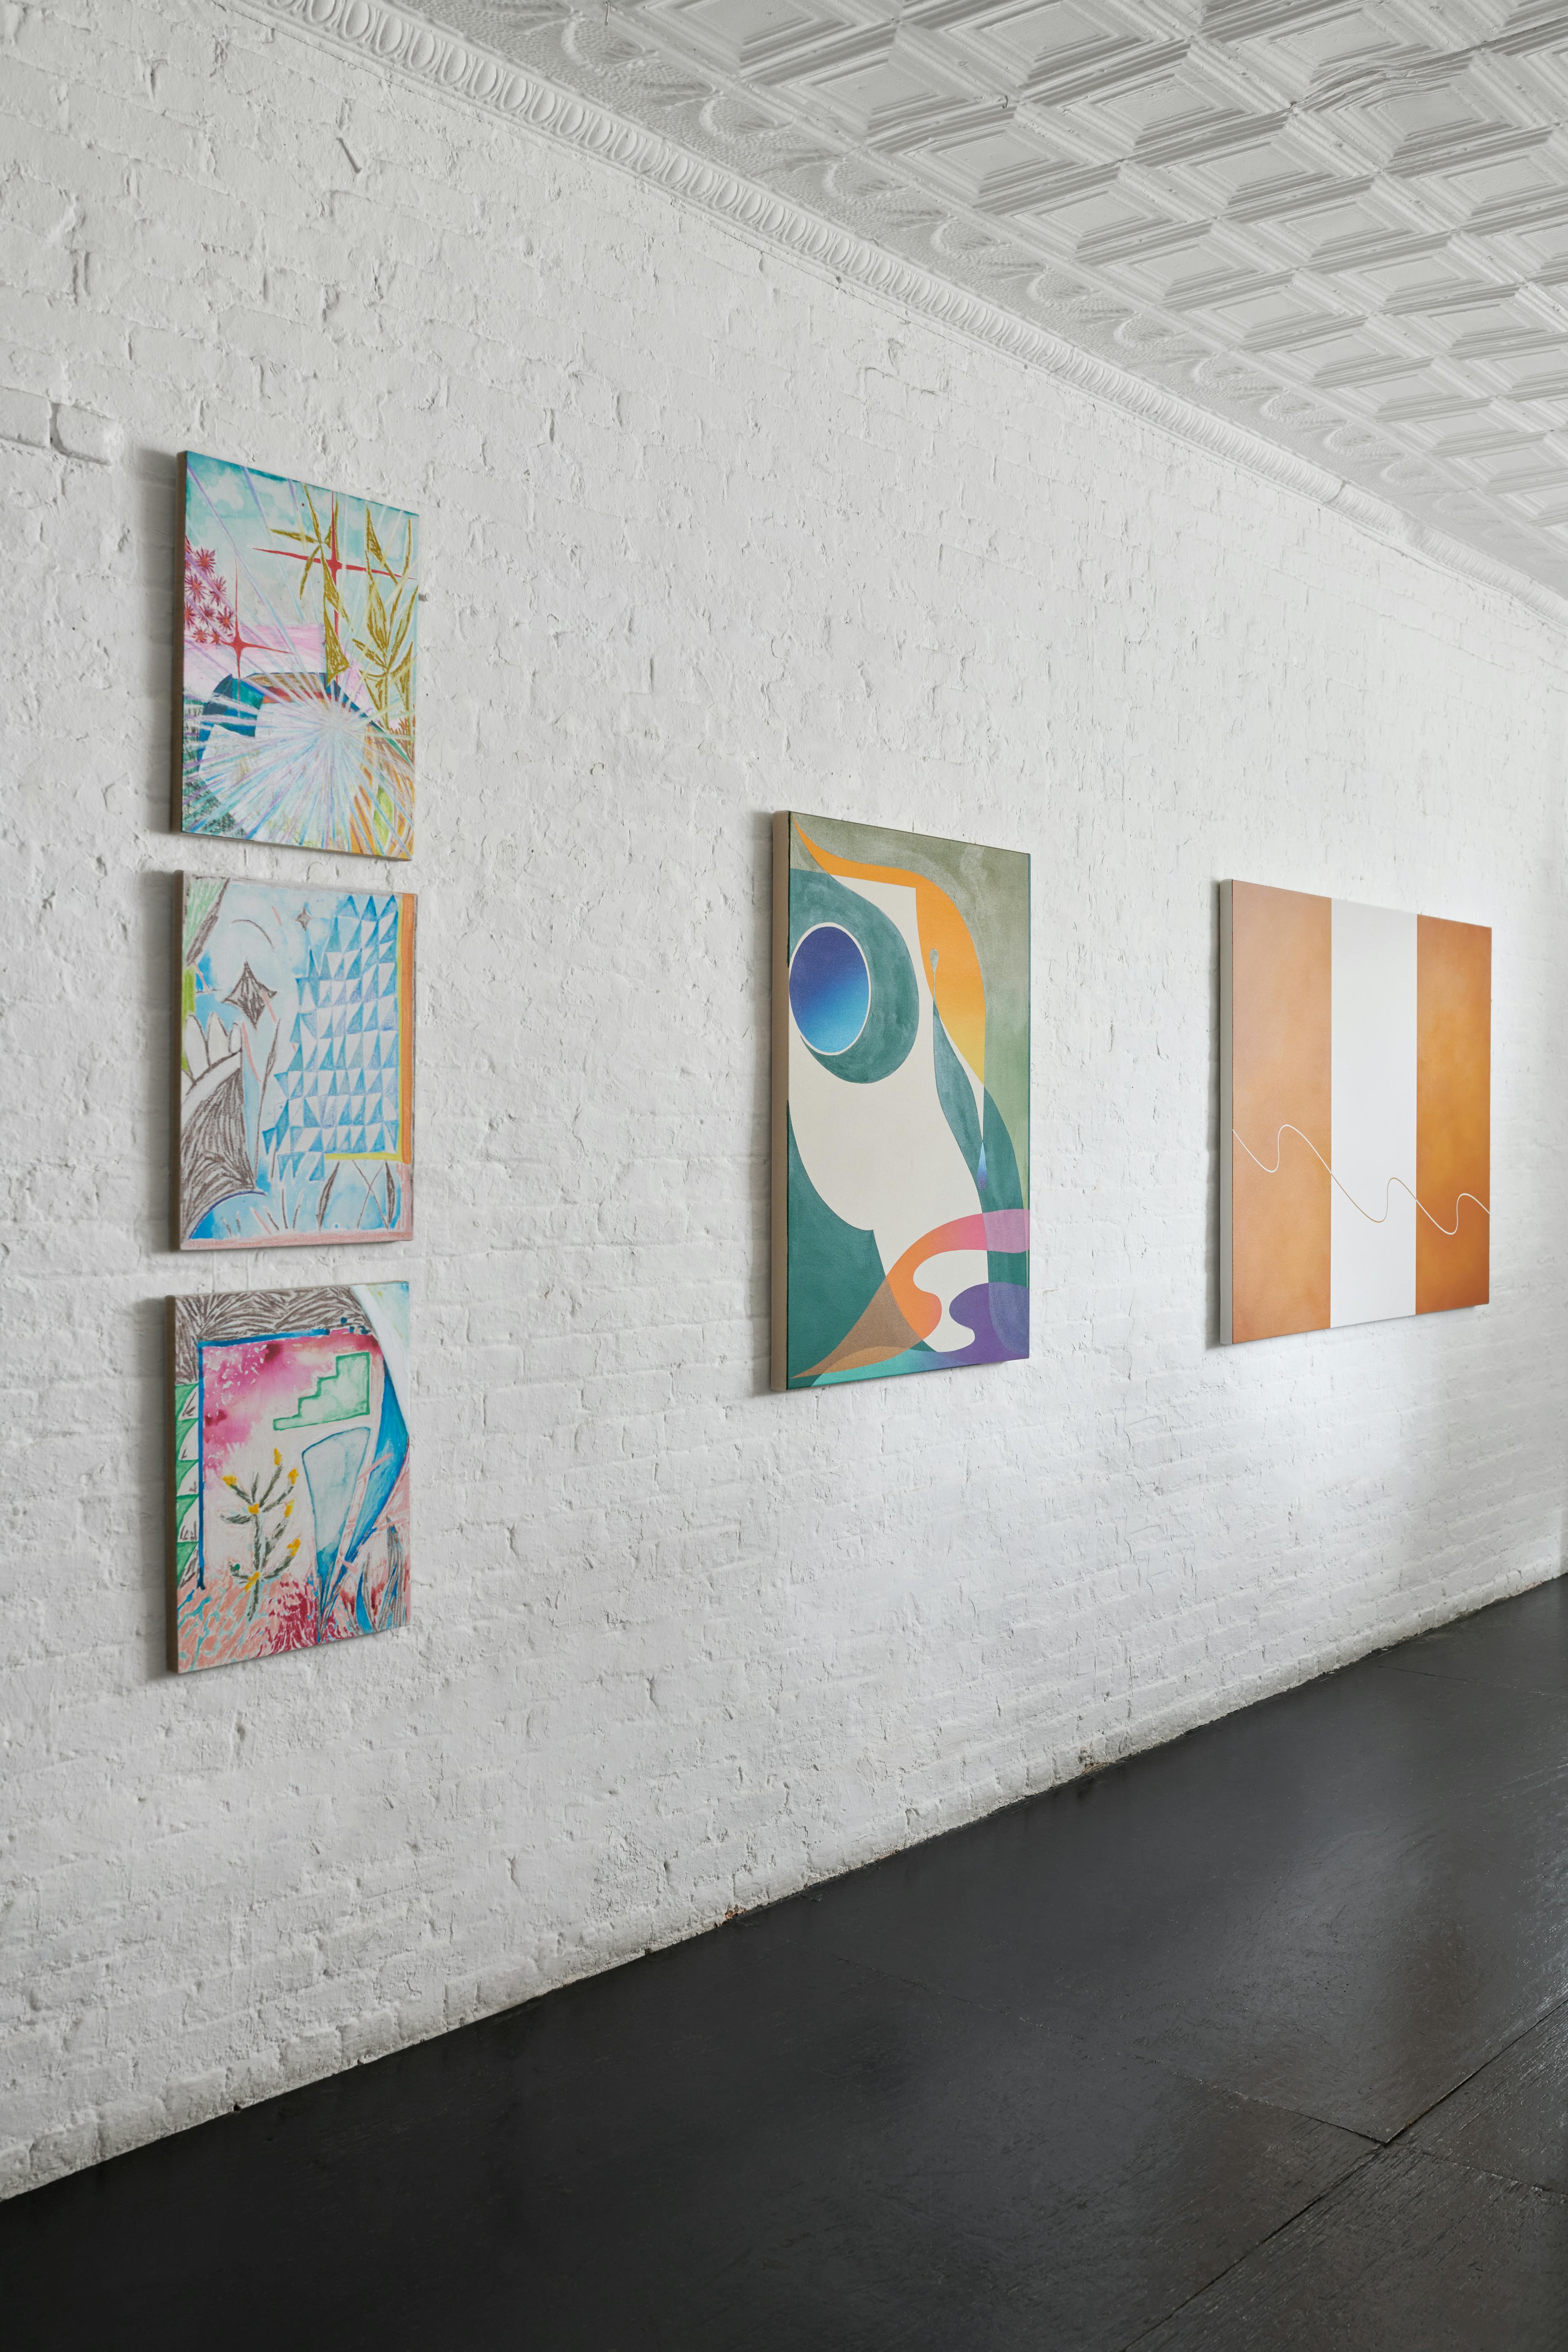 Paintings by Tyler Scheidt, Erin Zhao, and Senem Oezdogan installed at Uprise Art for exhibition Keepsake.